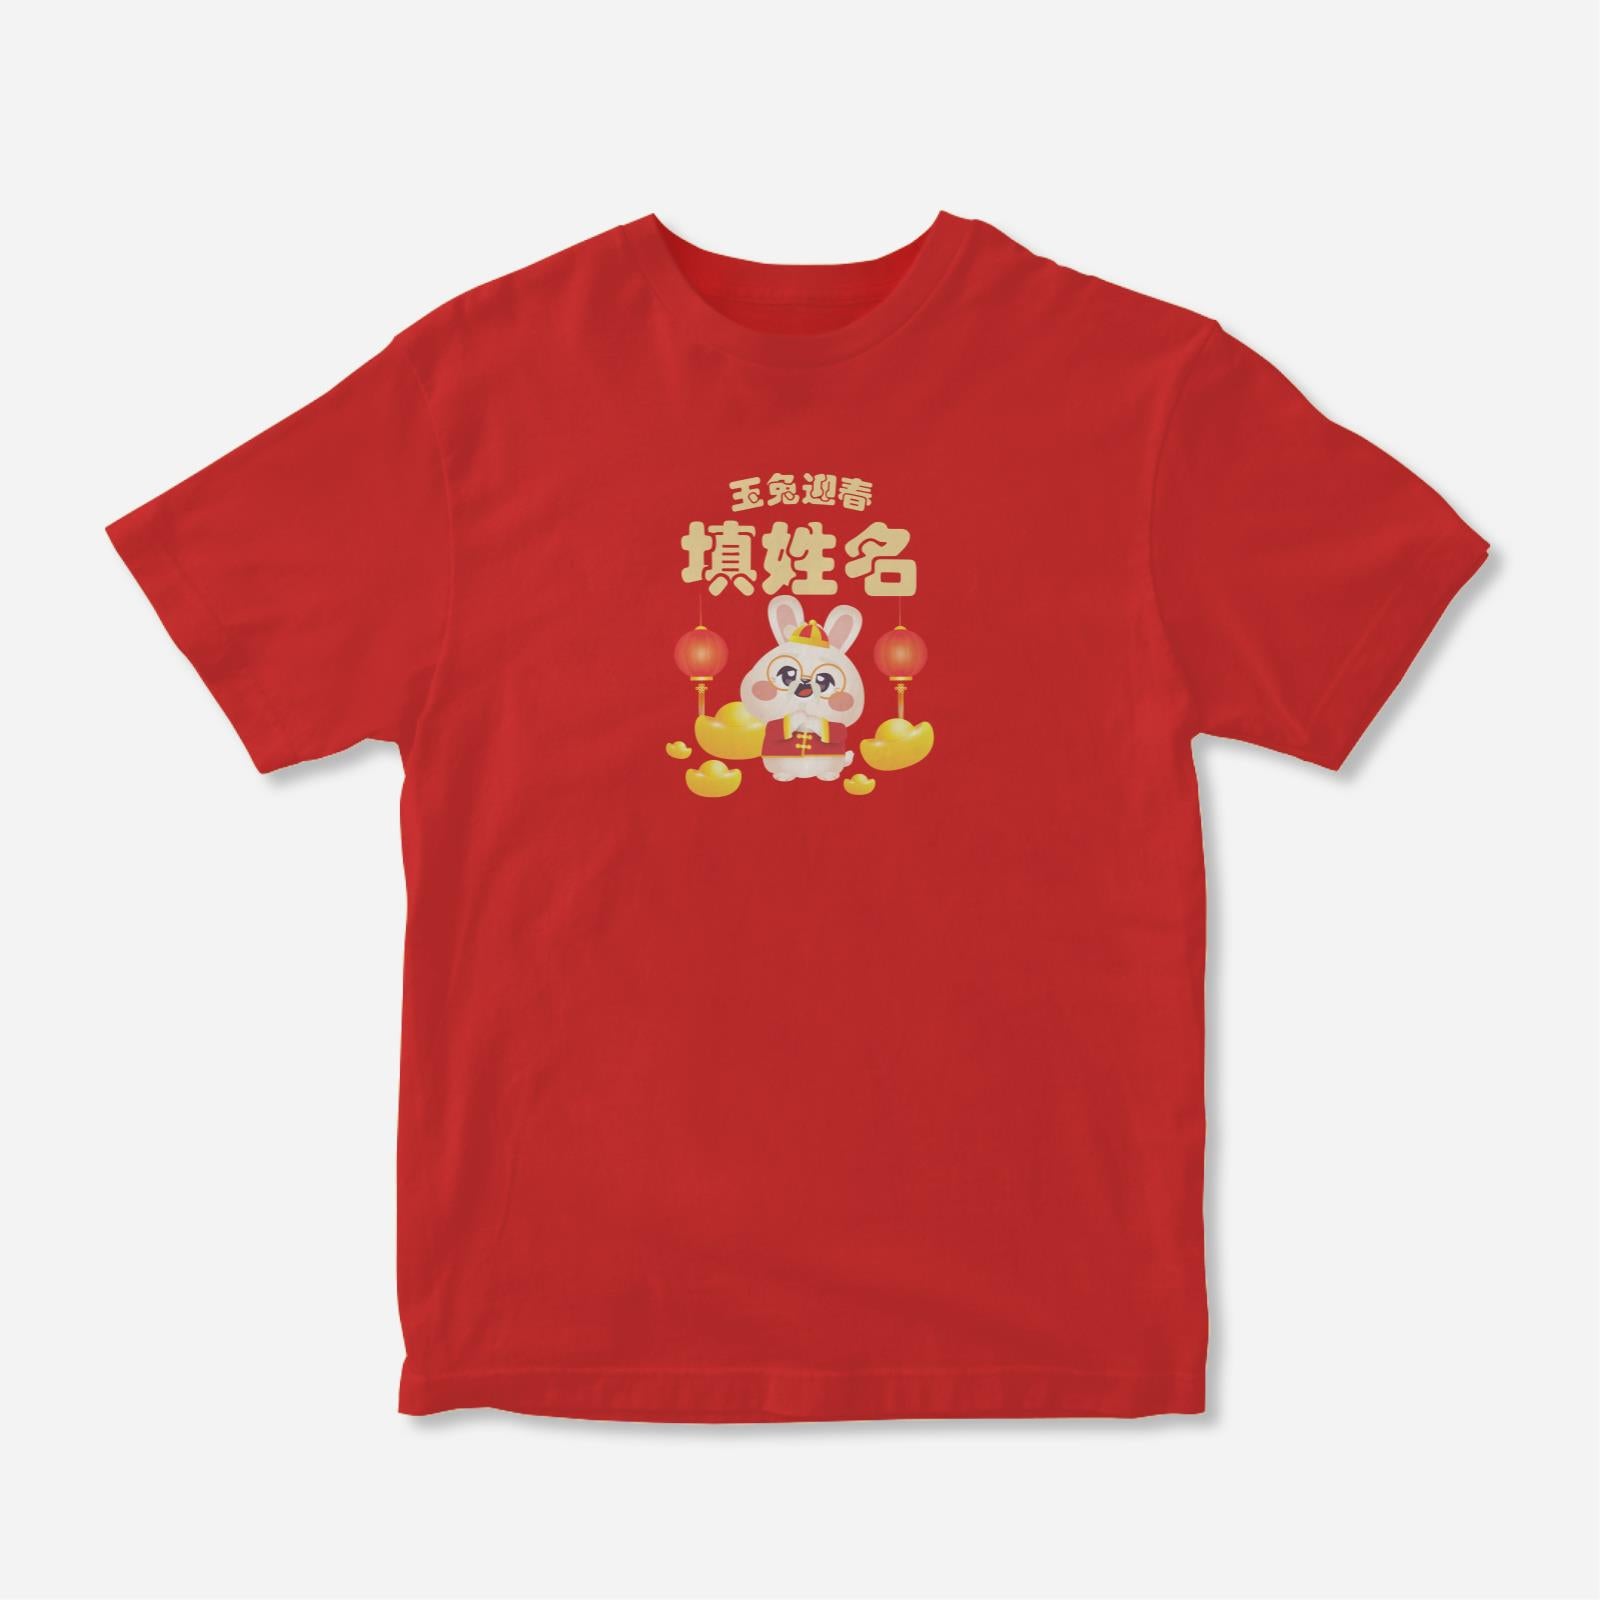 Cny Rabbit Family - Grandpa Rabbit Kids Tee Shirt with Chinese Personalization